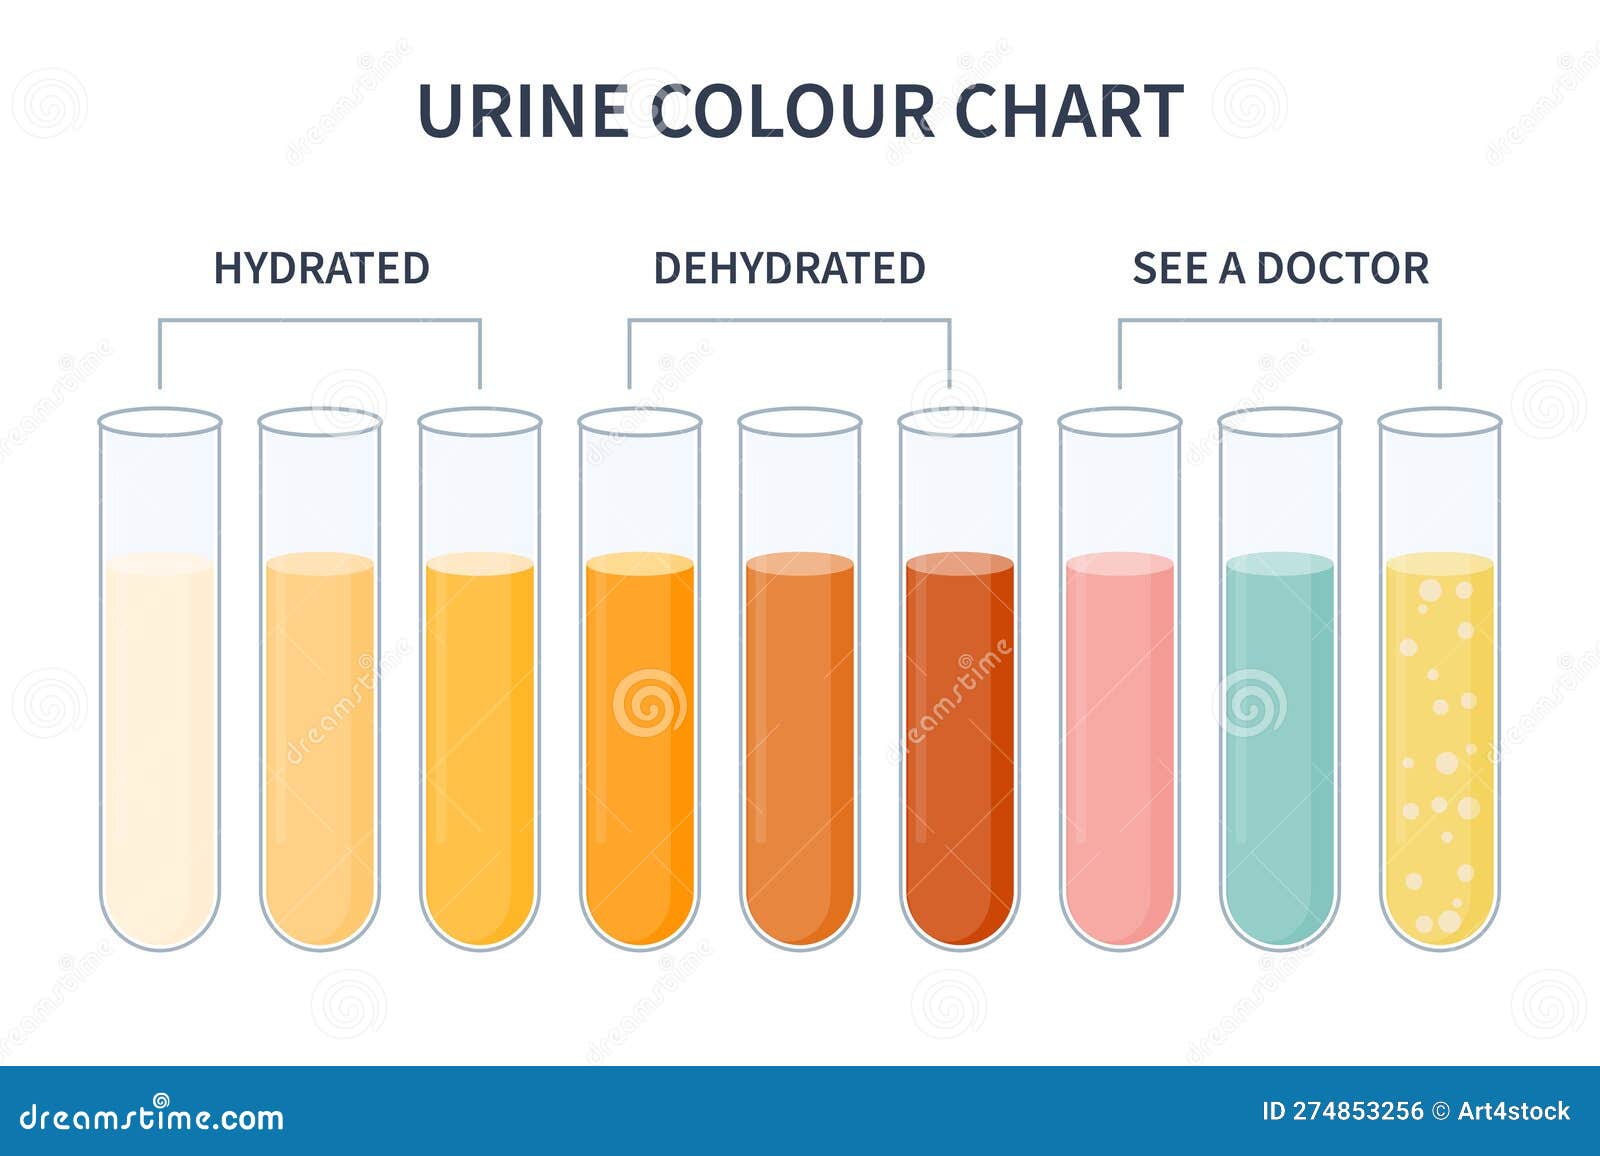 Urine Color Chart Illustration Of Dehydration Level | CartoonDealer.com ...